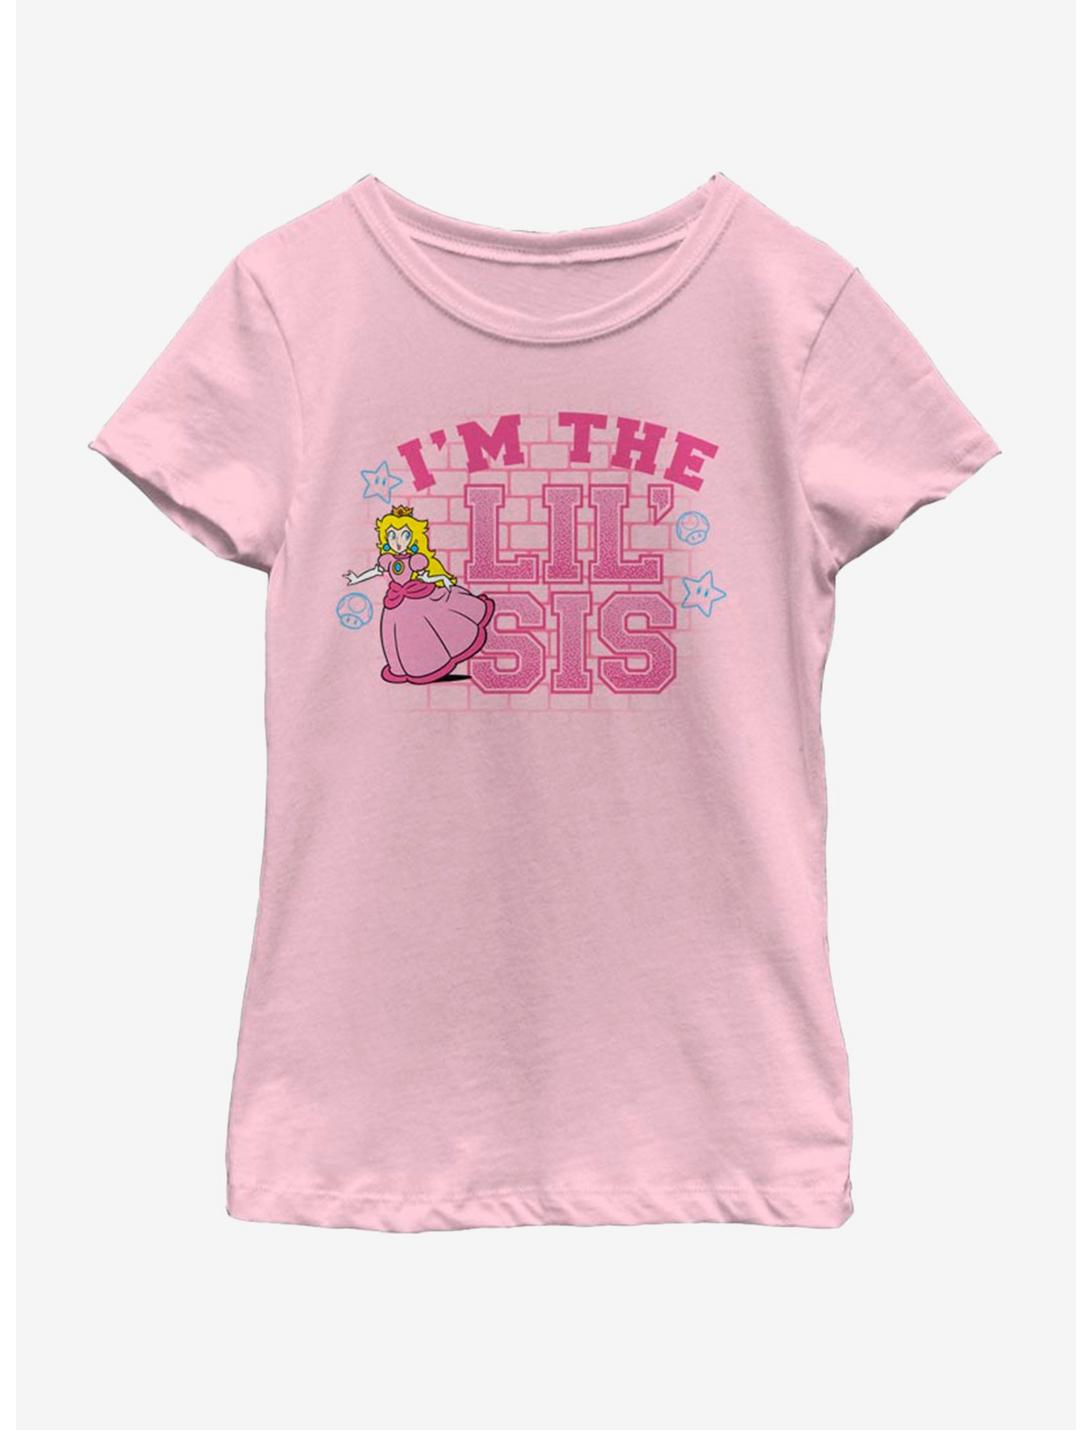 Nintendo Little Sis Youth Girls T-Shirt, PINK, hi-res